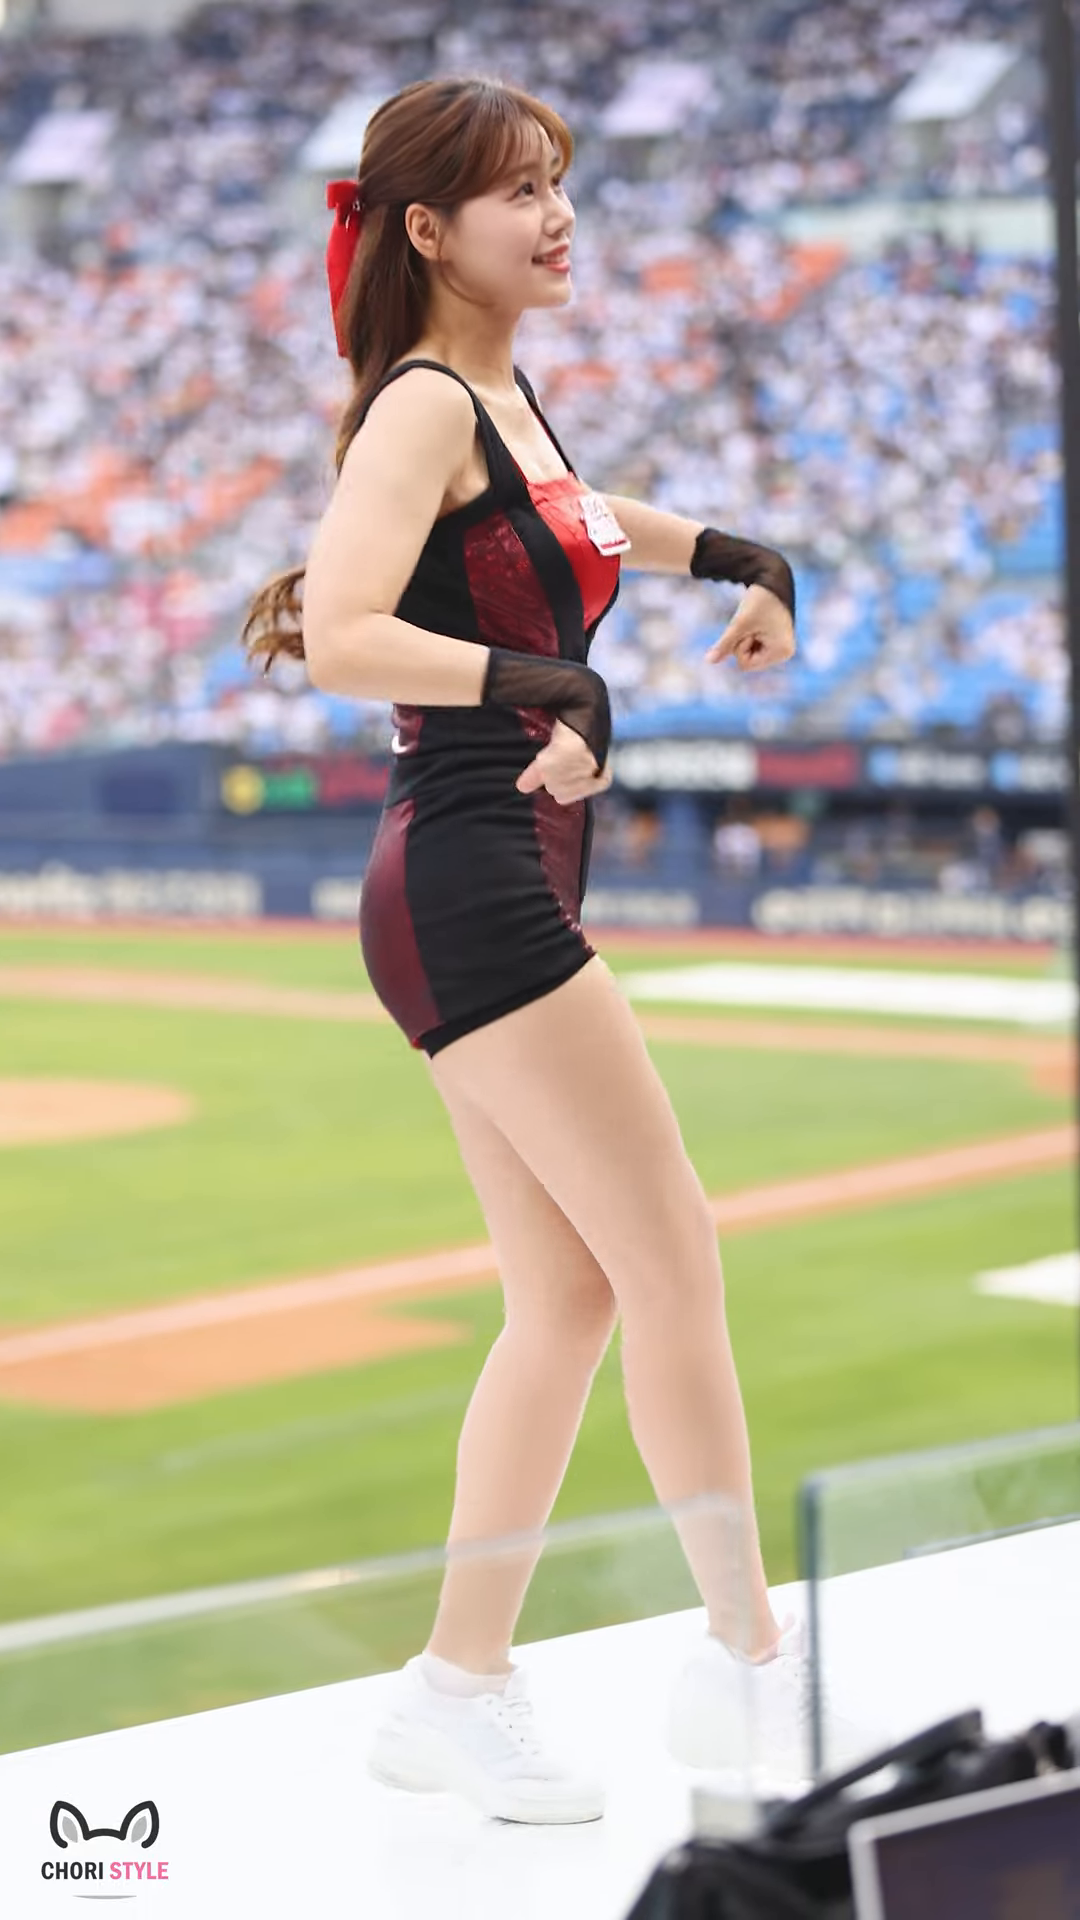 Kim Doa,Korean cherrleader,beautiful skin, butt 9